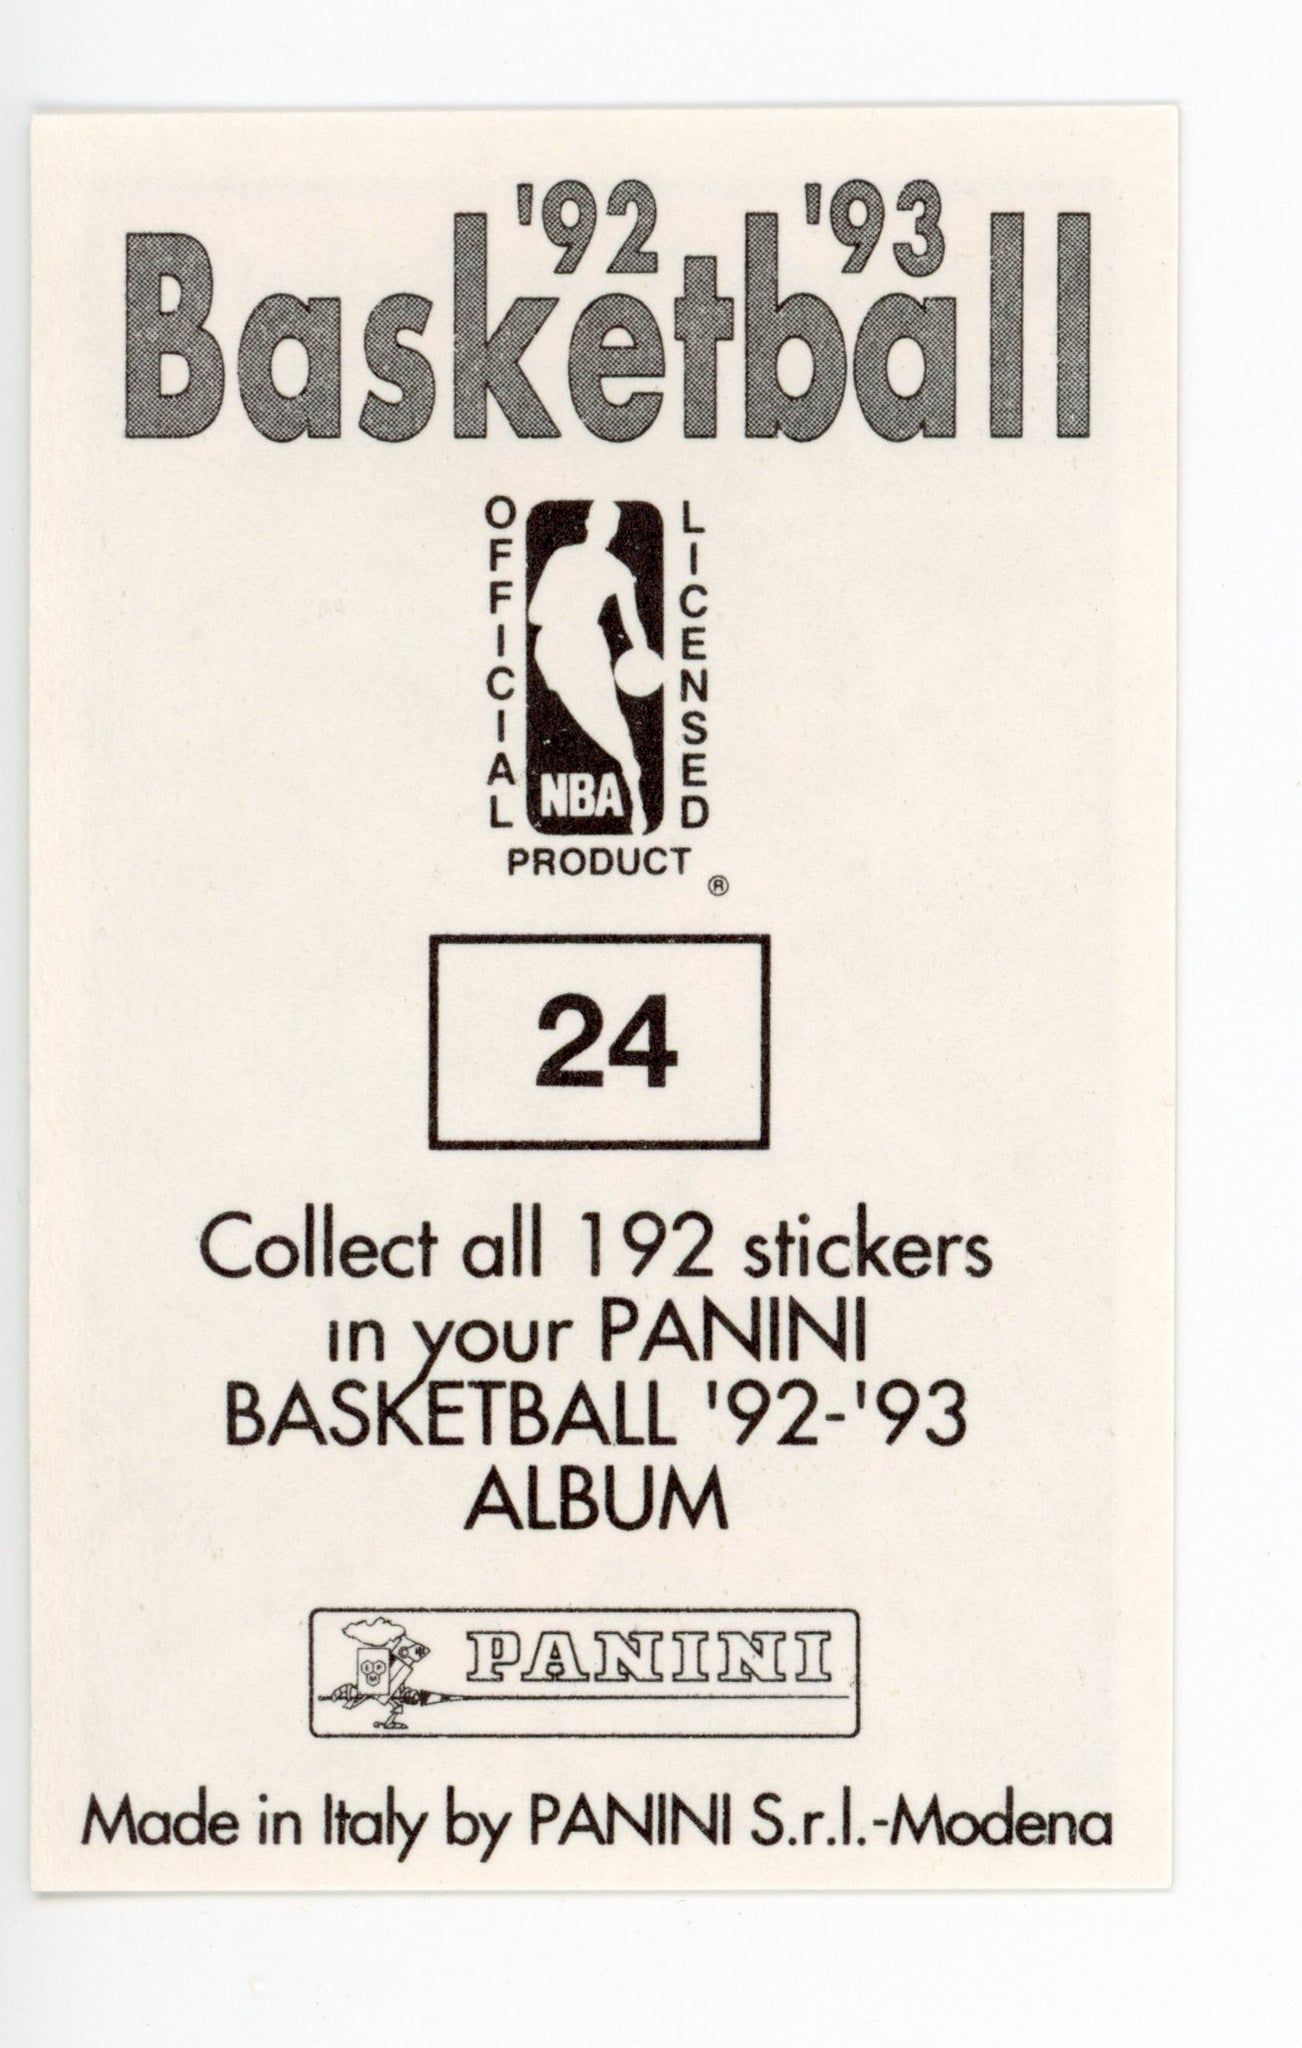 Sarunas Marciulionis Panini 1992-1993 Basketball Sticker Golden State Warriors #24